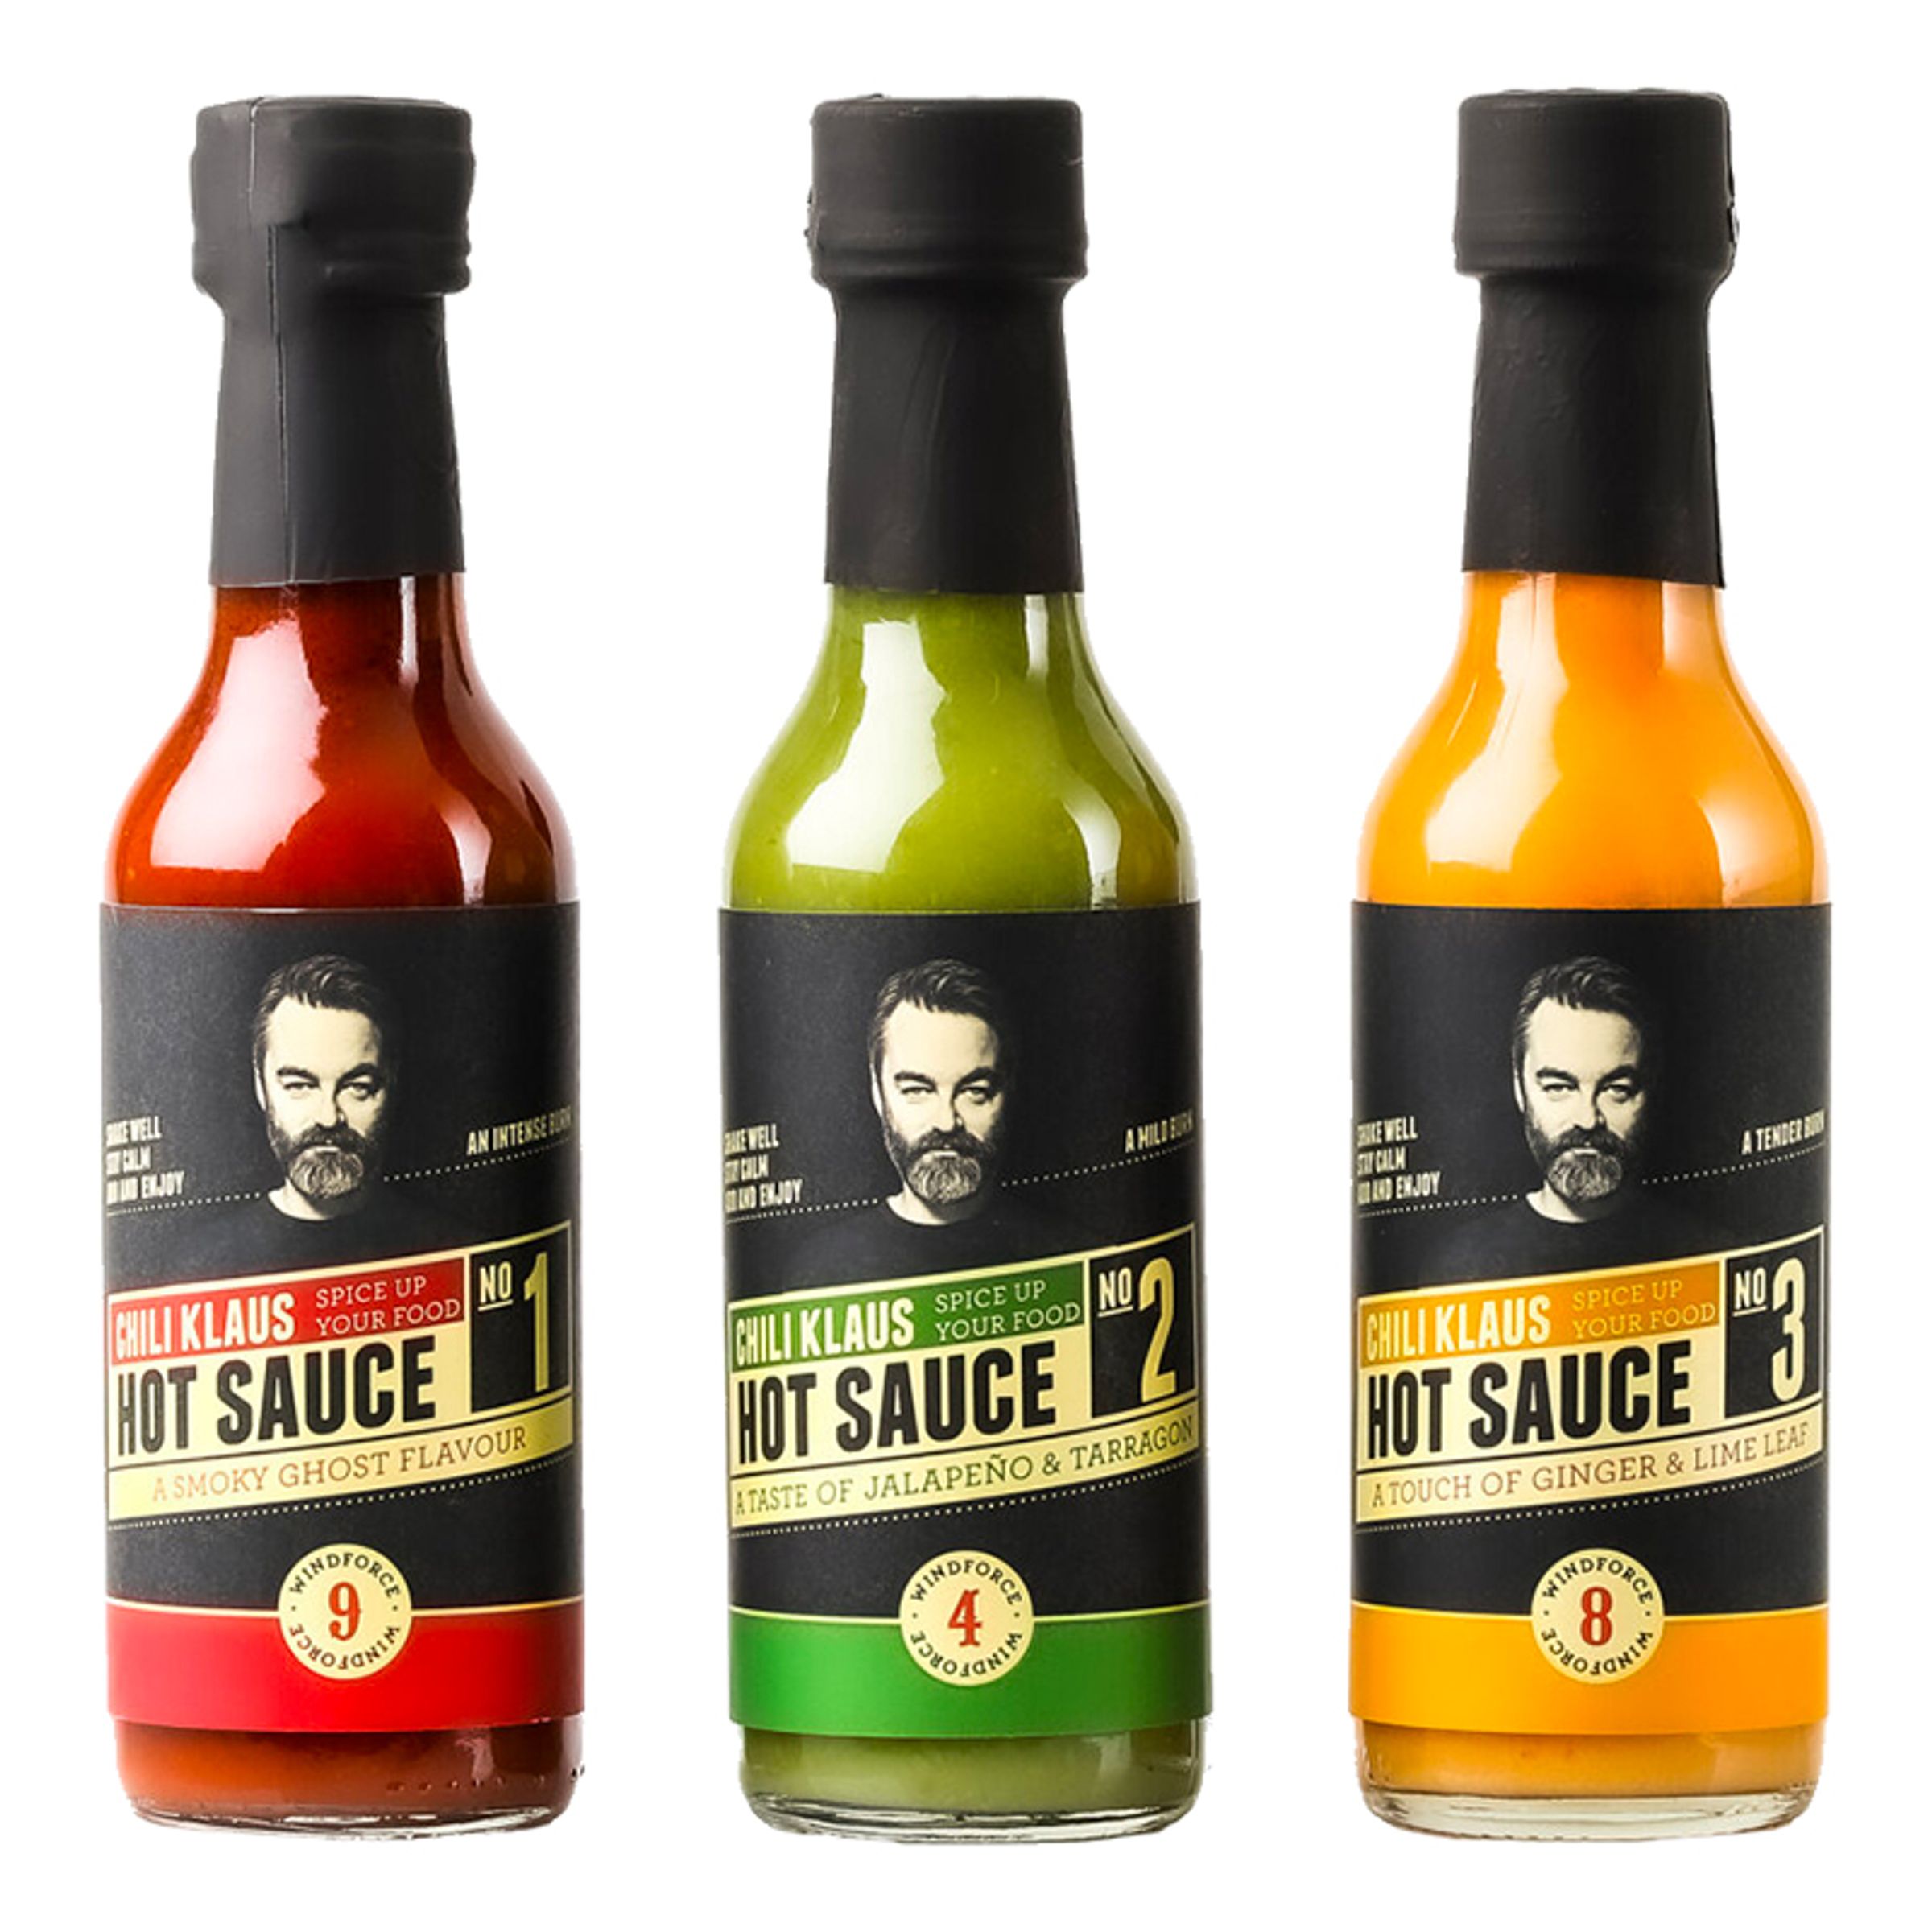 Chili Klaus Hot Sauce Gift Pack - 3-pack